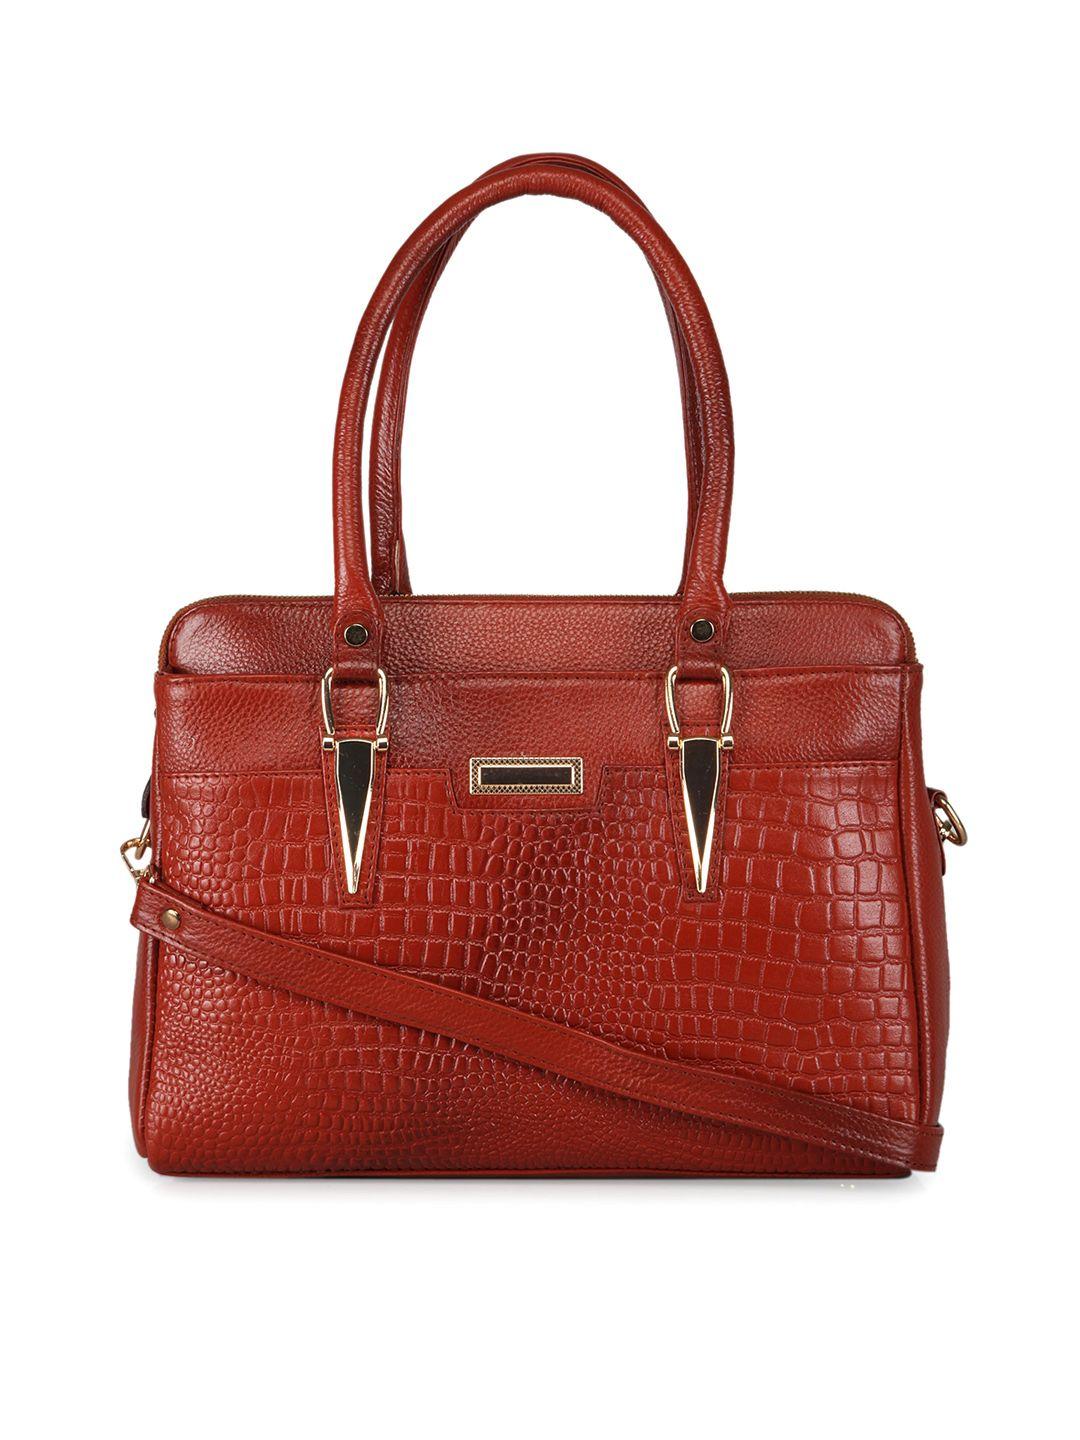 genwayne leather shopper handheld bag